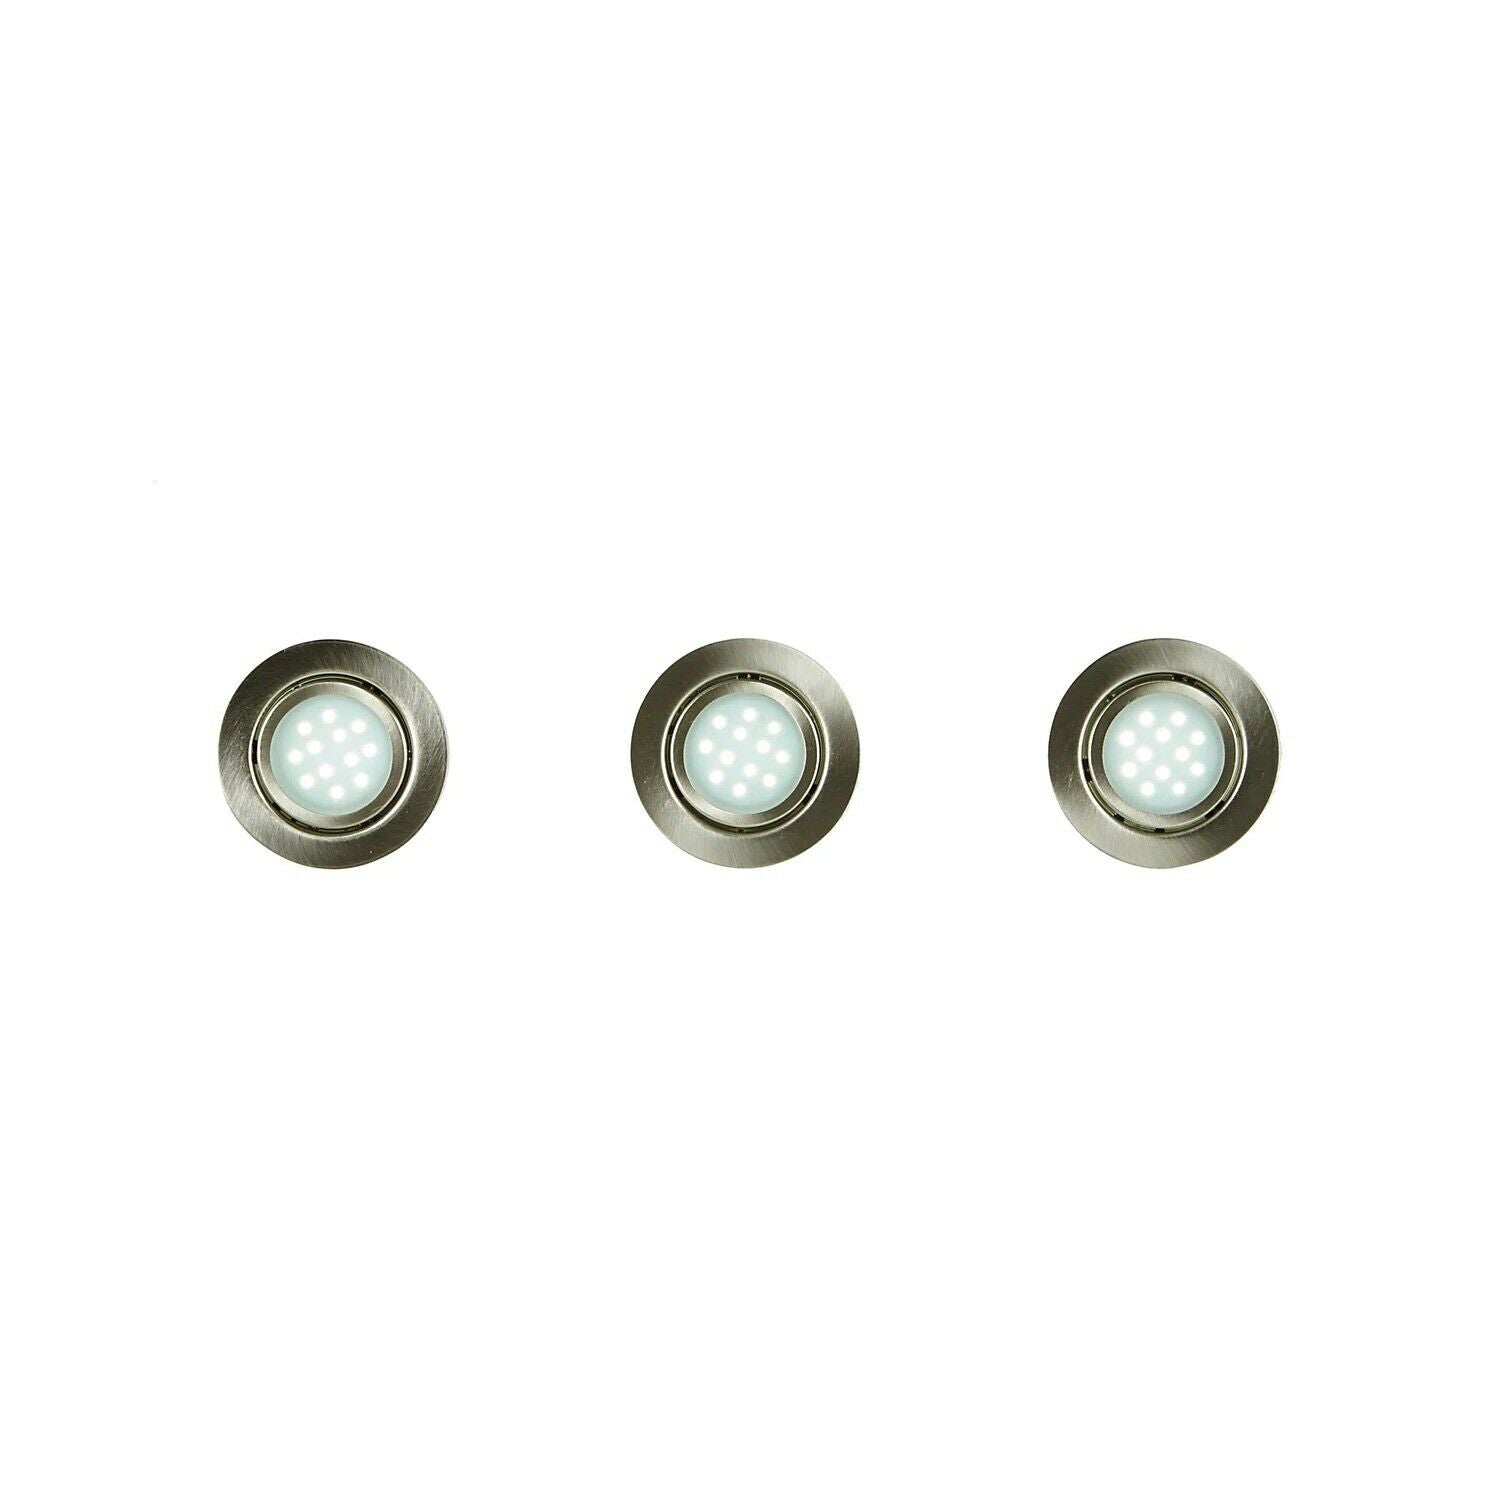 Satin Nickel effect LED Cabinet light, Pack of 3 - 6012